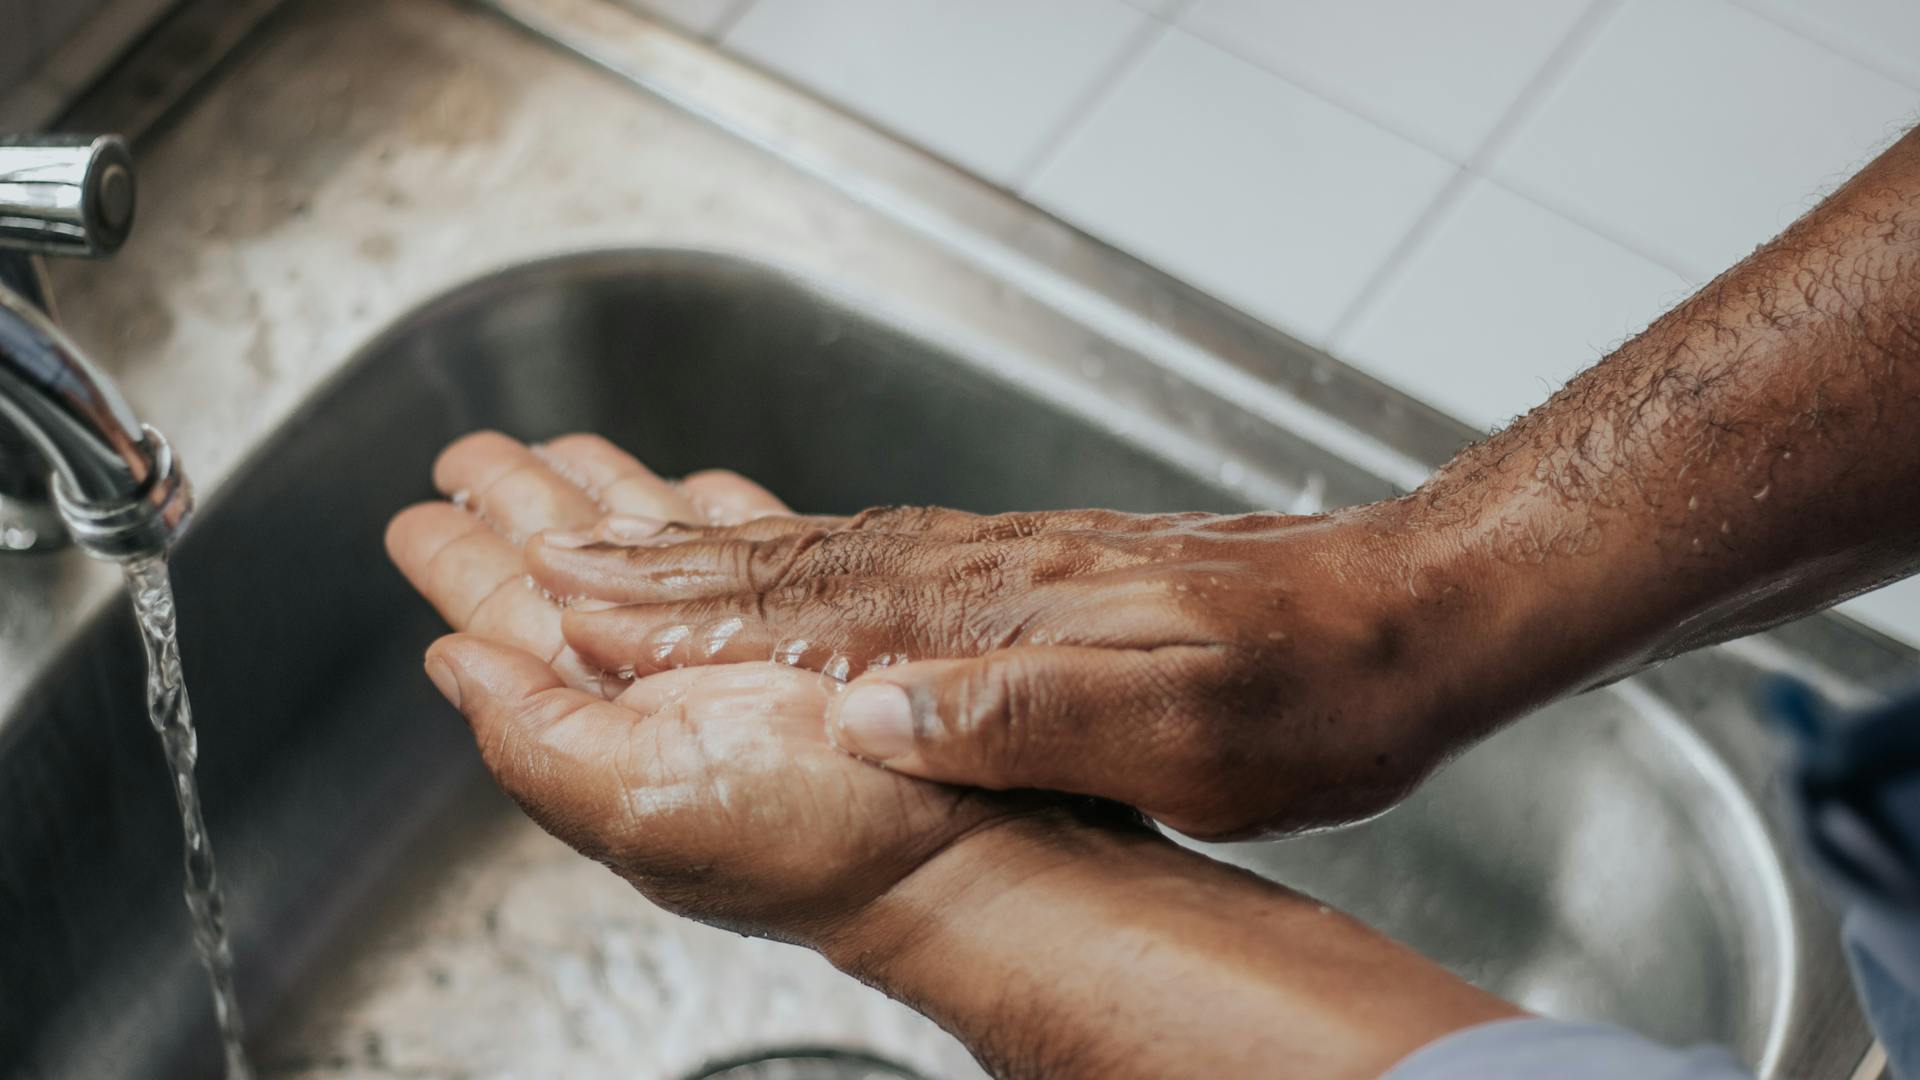 Washing hands, hot water